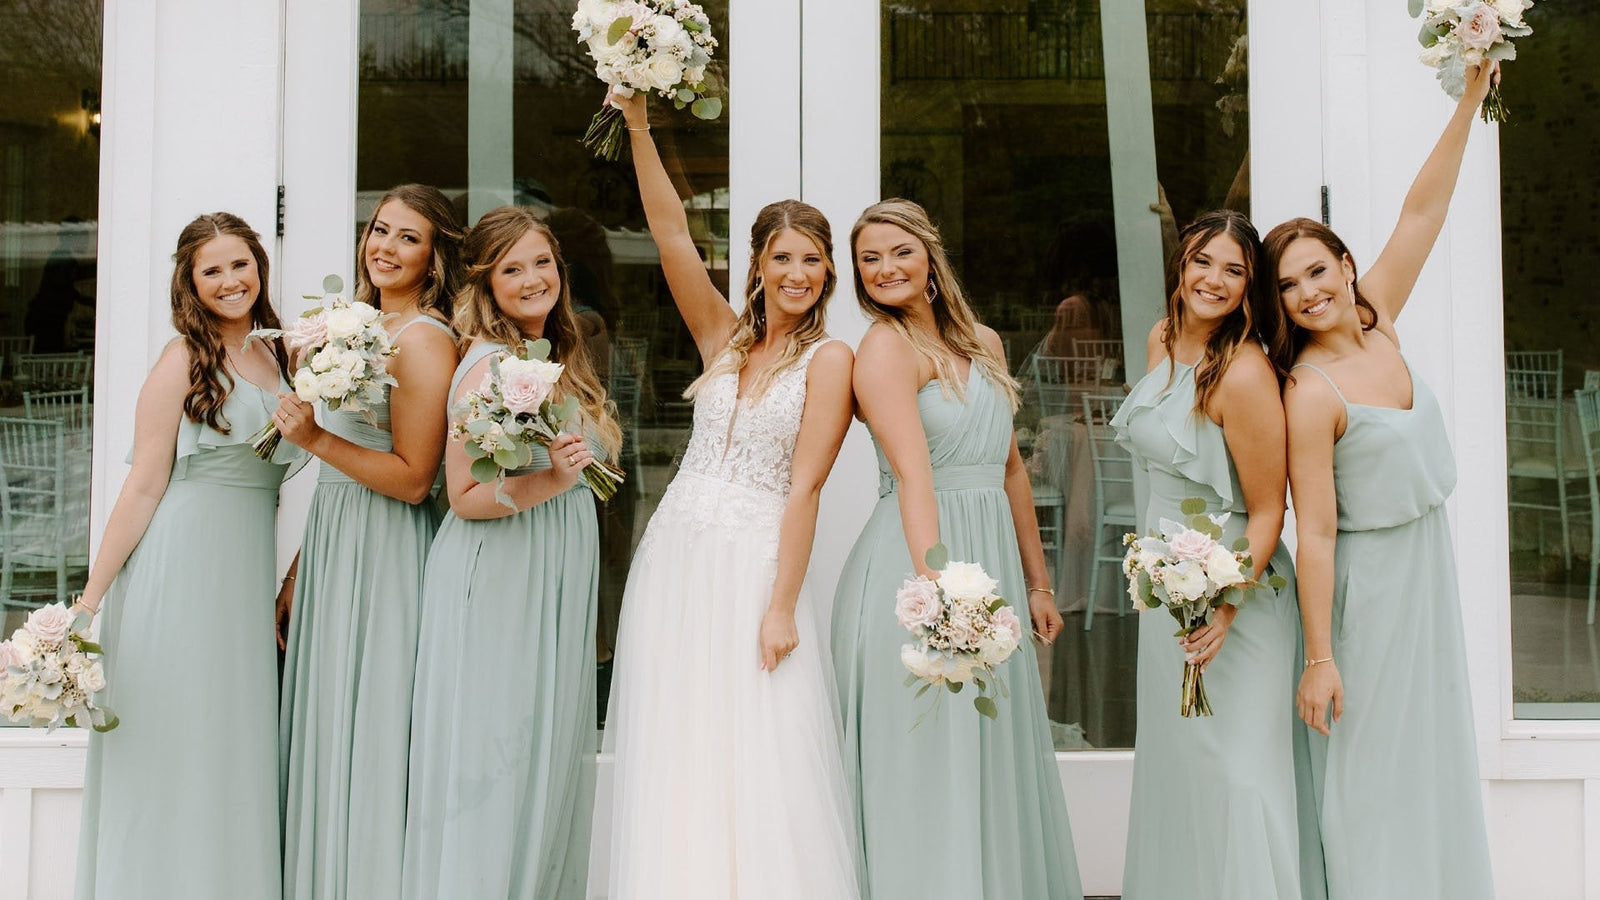 Sage Green Bridesmaid Dresses: 10 Fresh Styles FAQs | vlr.eng.br